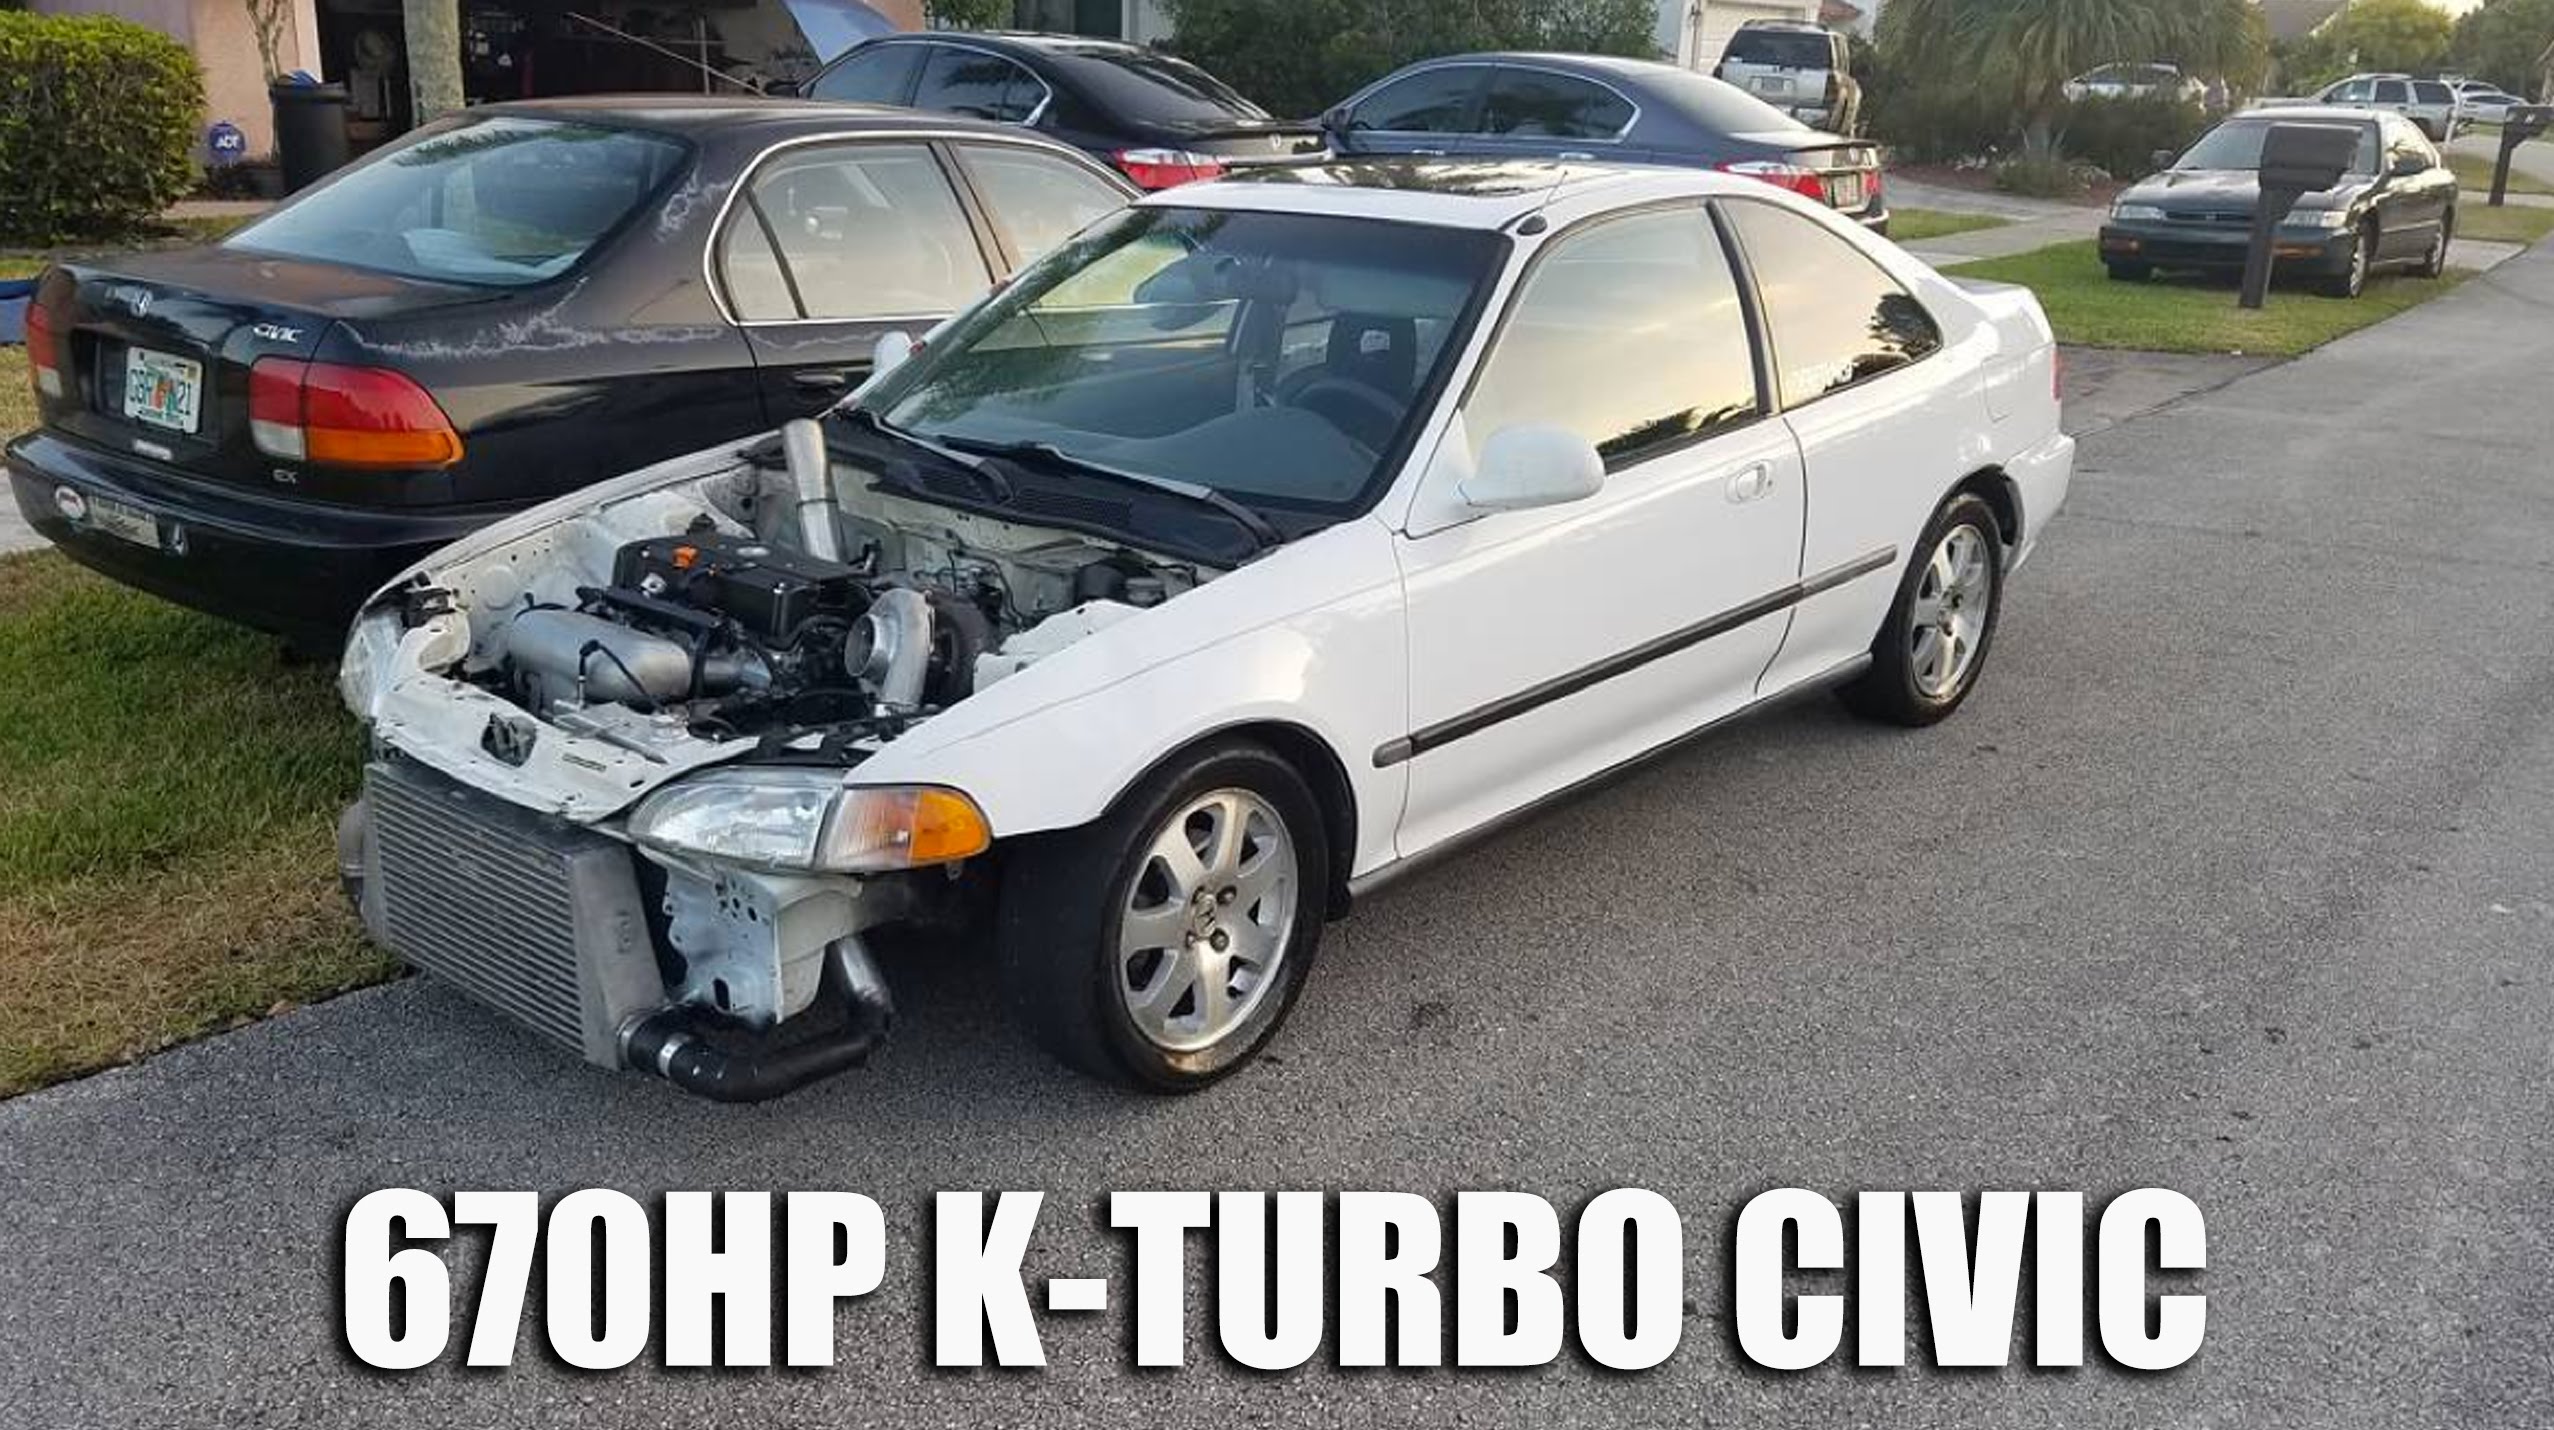 Giant Killer - 670HP Turbo K20 Honda Civic